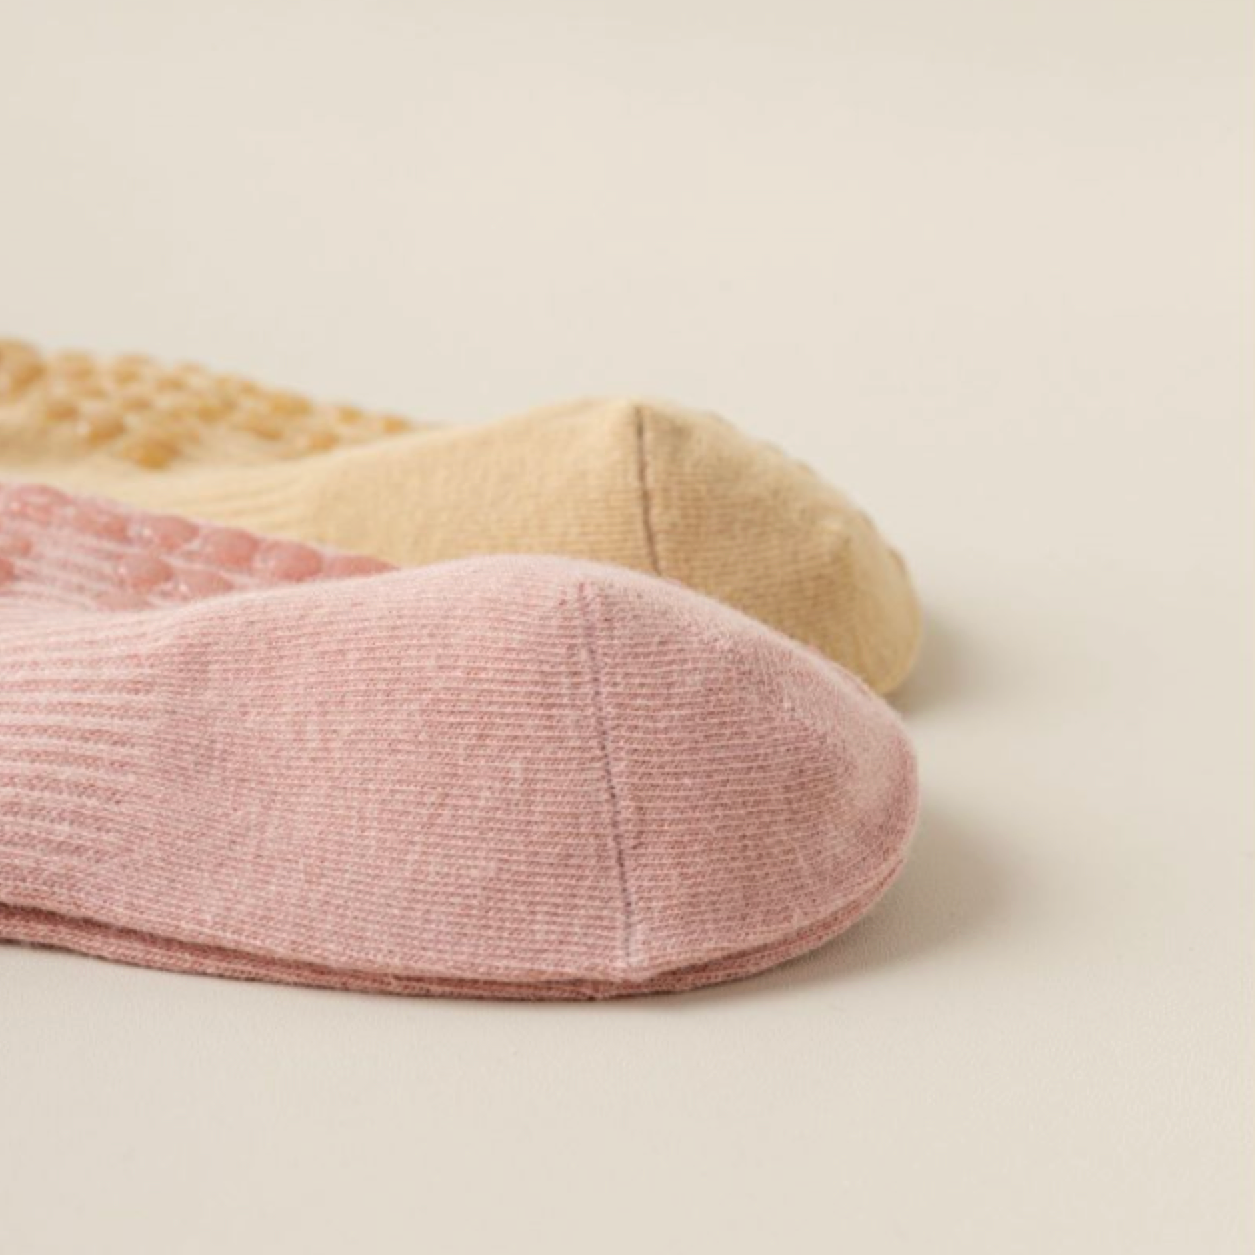 Moto Open Toe Grip Socks - Light Pink (Barre / Pilates)